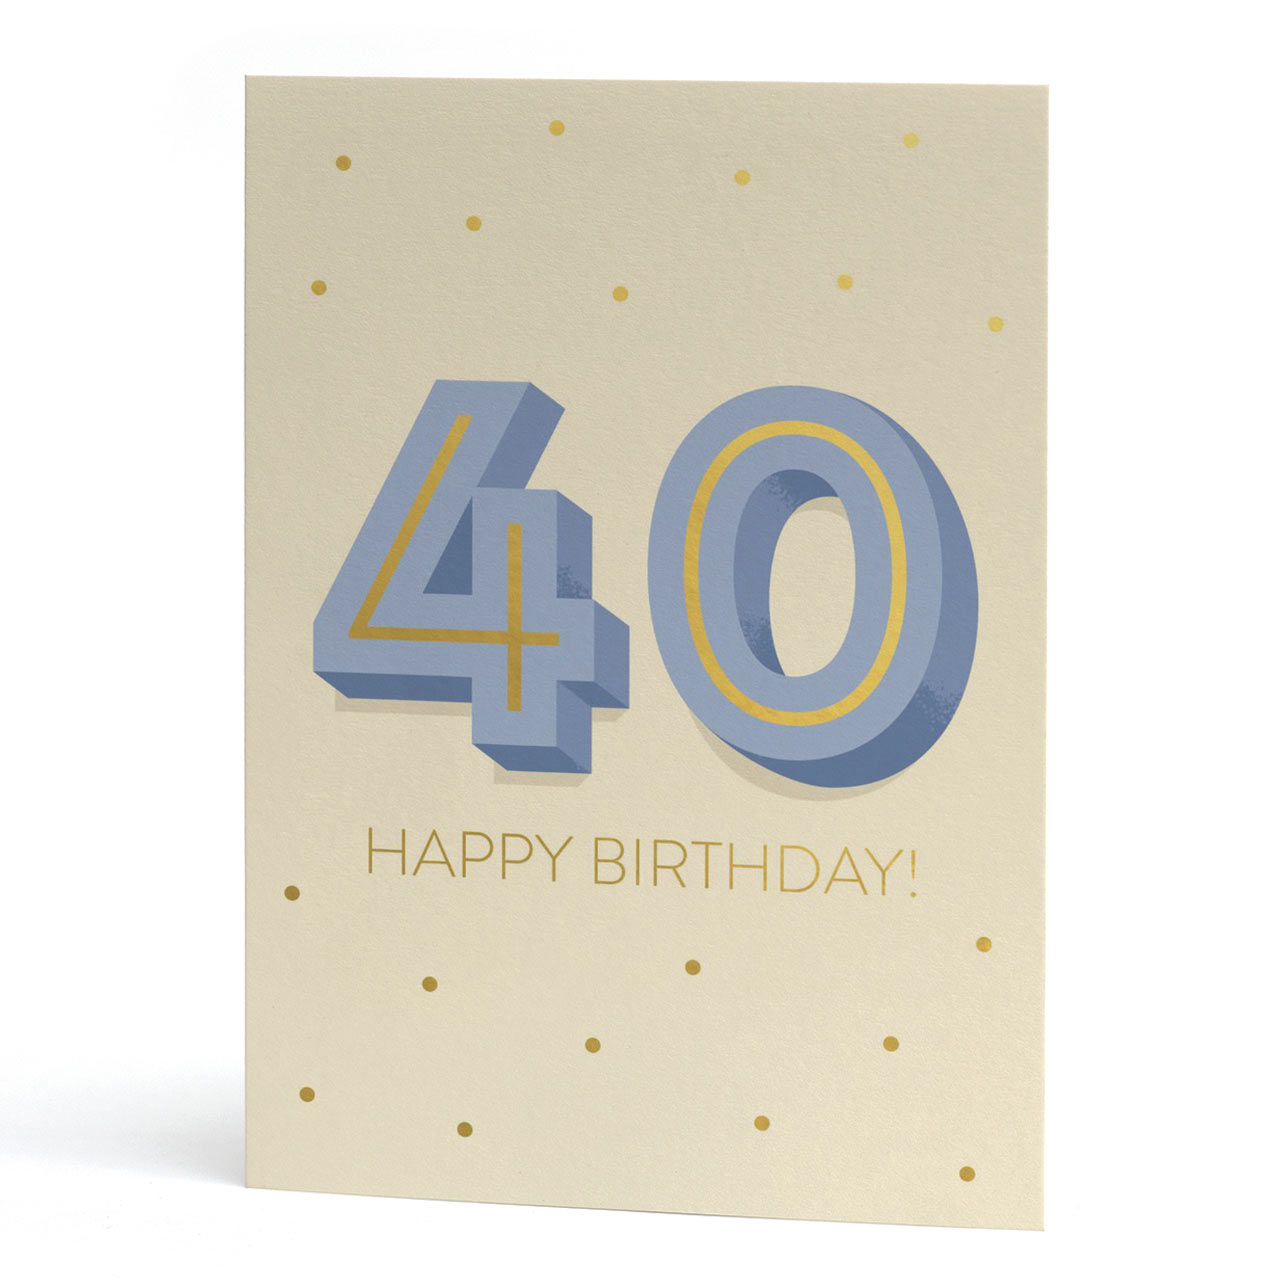 Big 40th Birthday Gold Foil Greeting Card